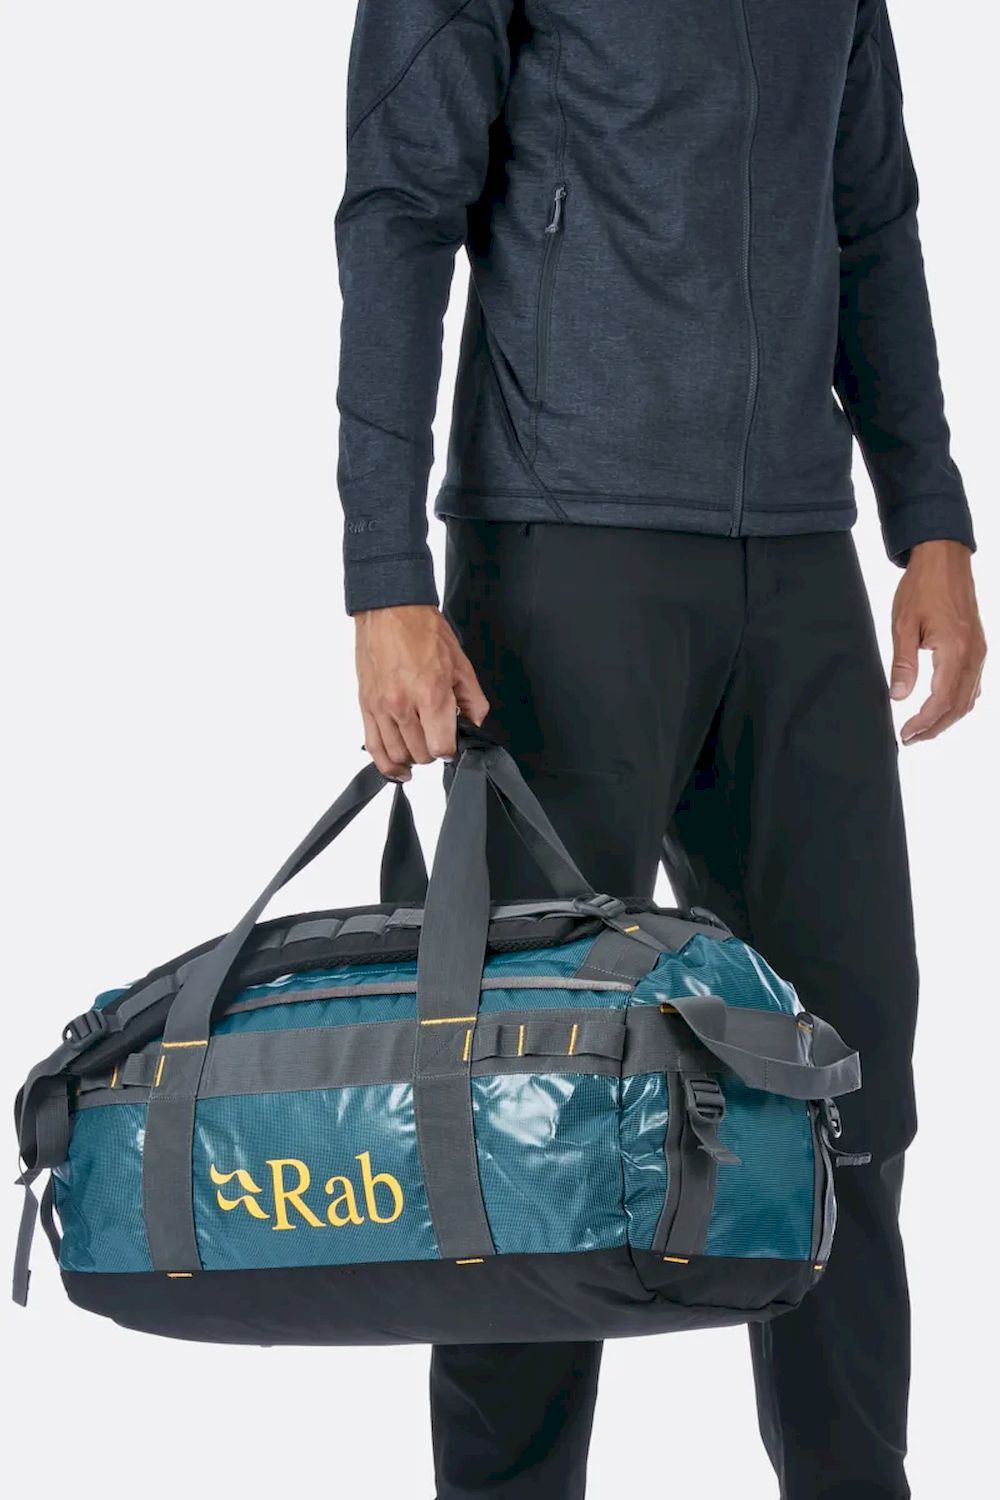 Rab Expedition Kitbag 50 - Travel backpack - Men's